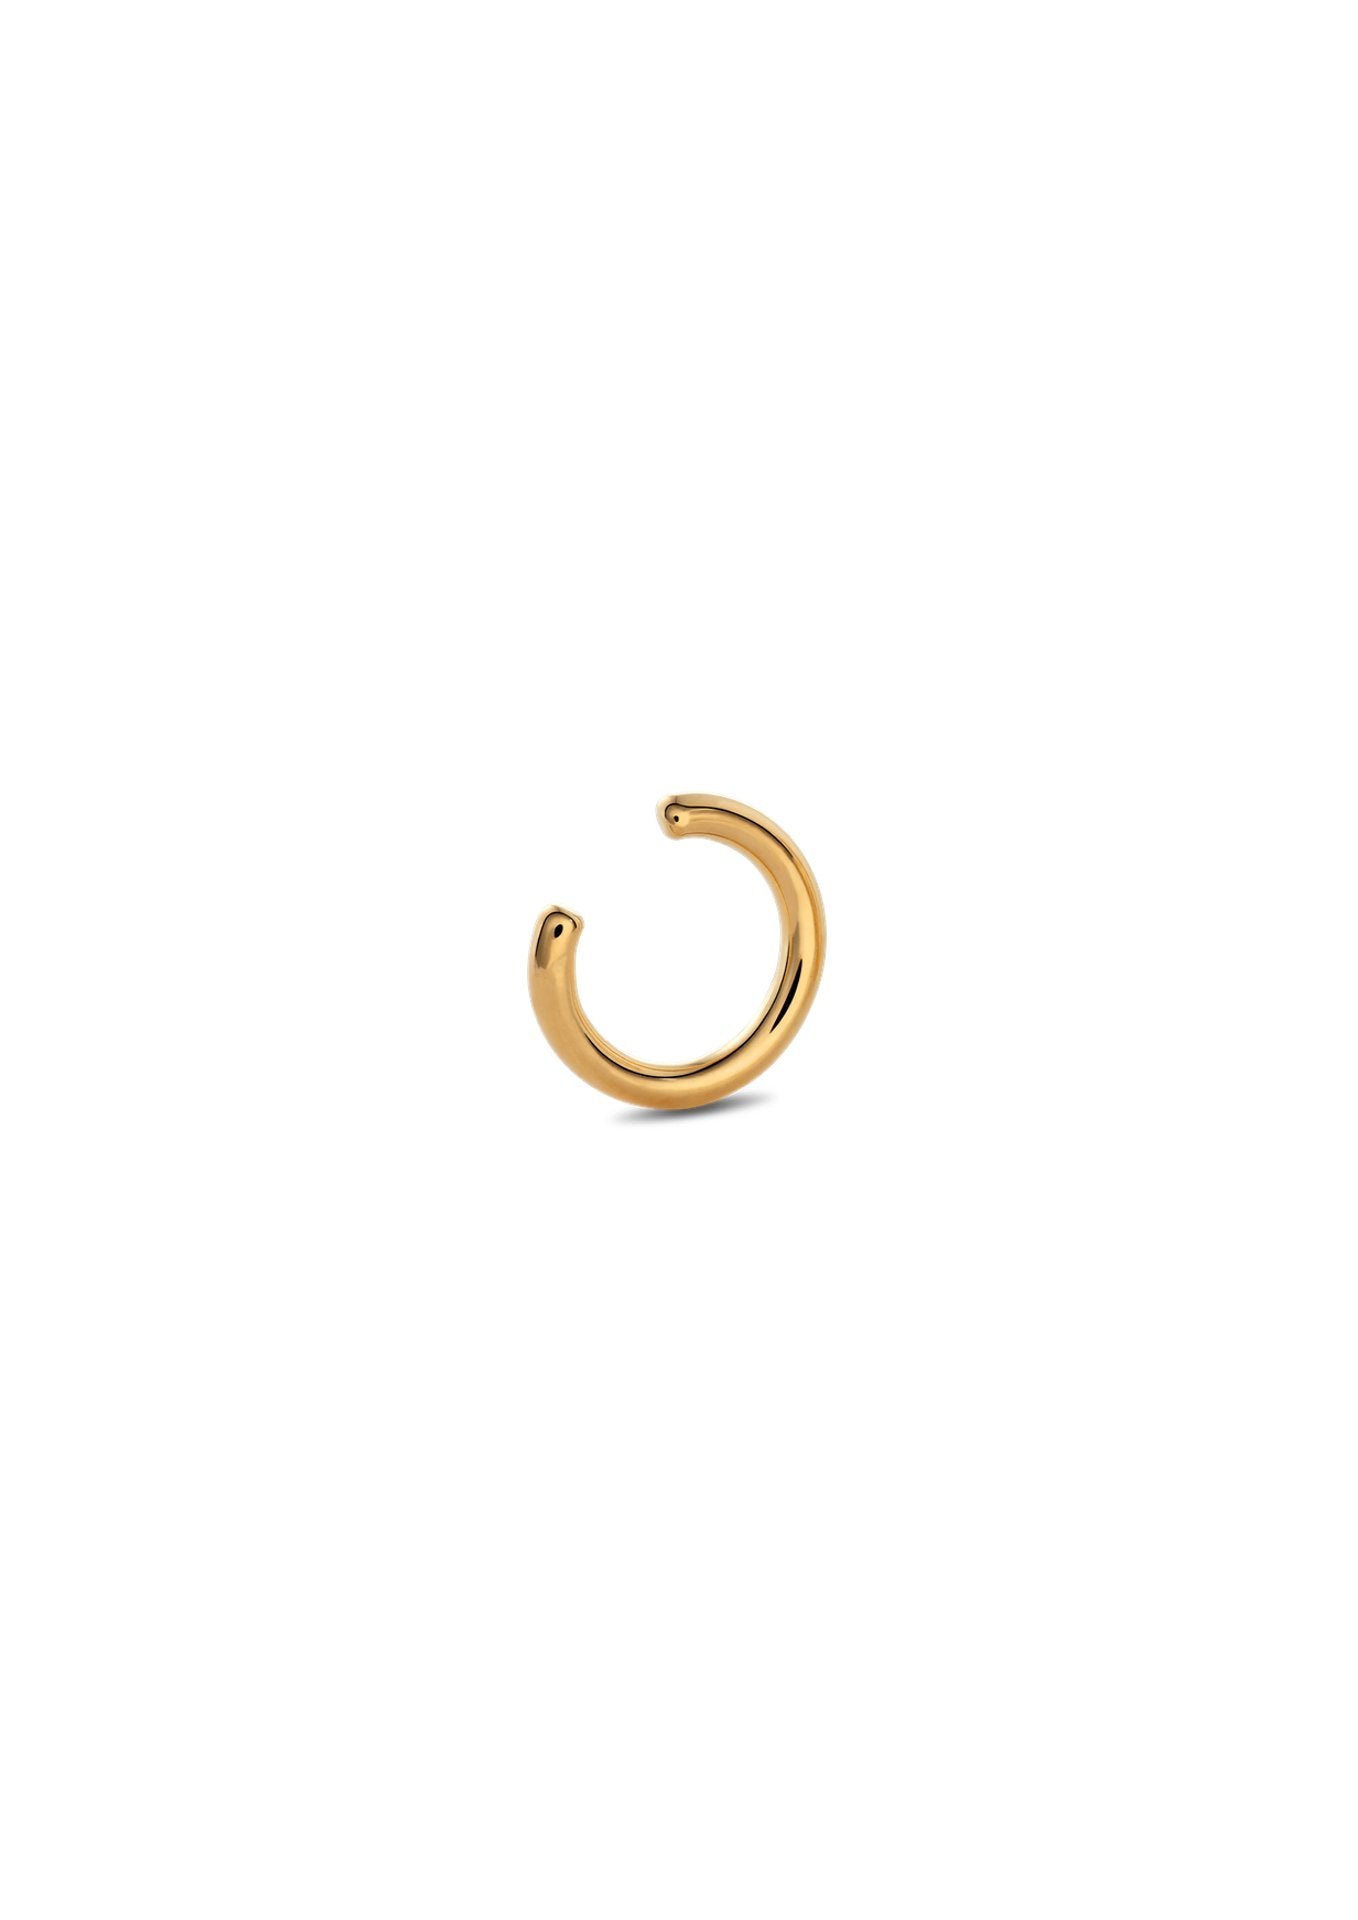 Line Ear Cuff Gold | Handmade Jewelry | NOMORE accessories